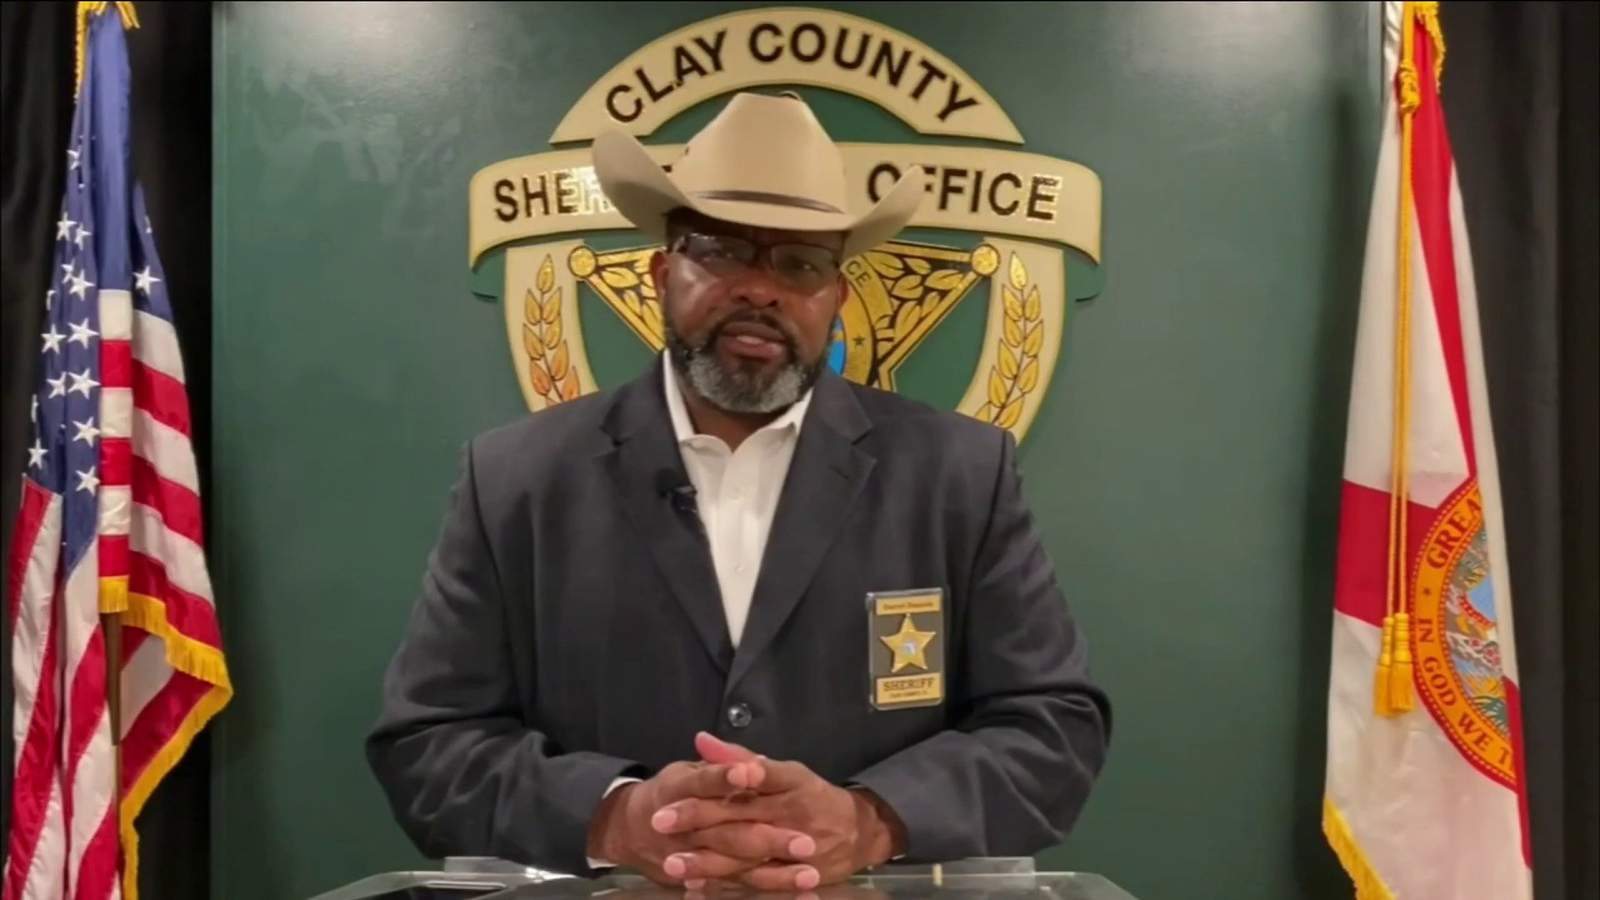 Governor suspends Florida sheriff amid sex scandal investigation